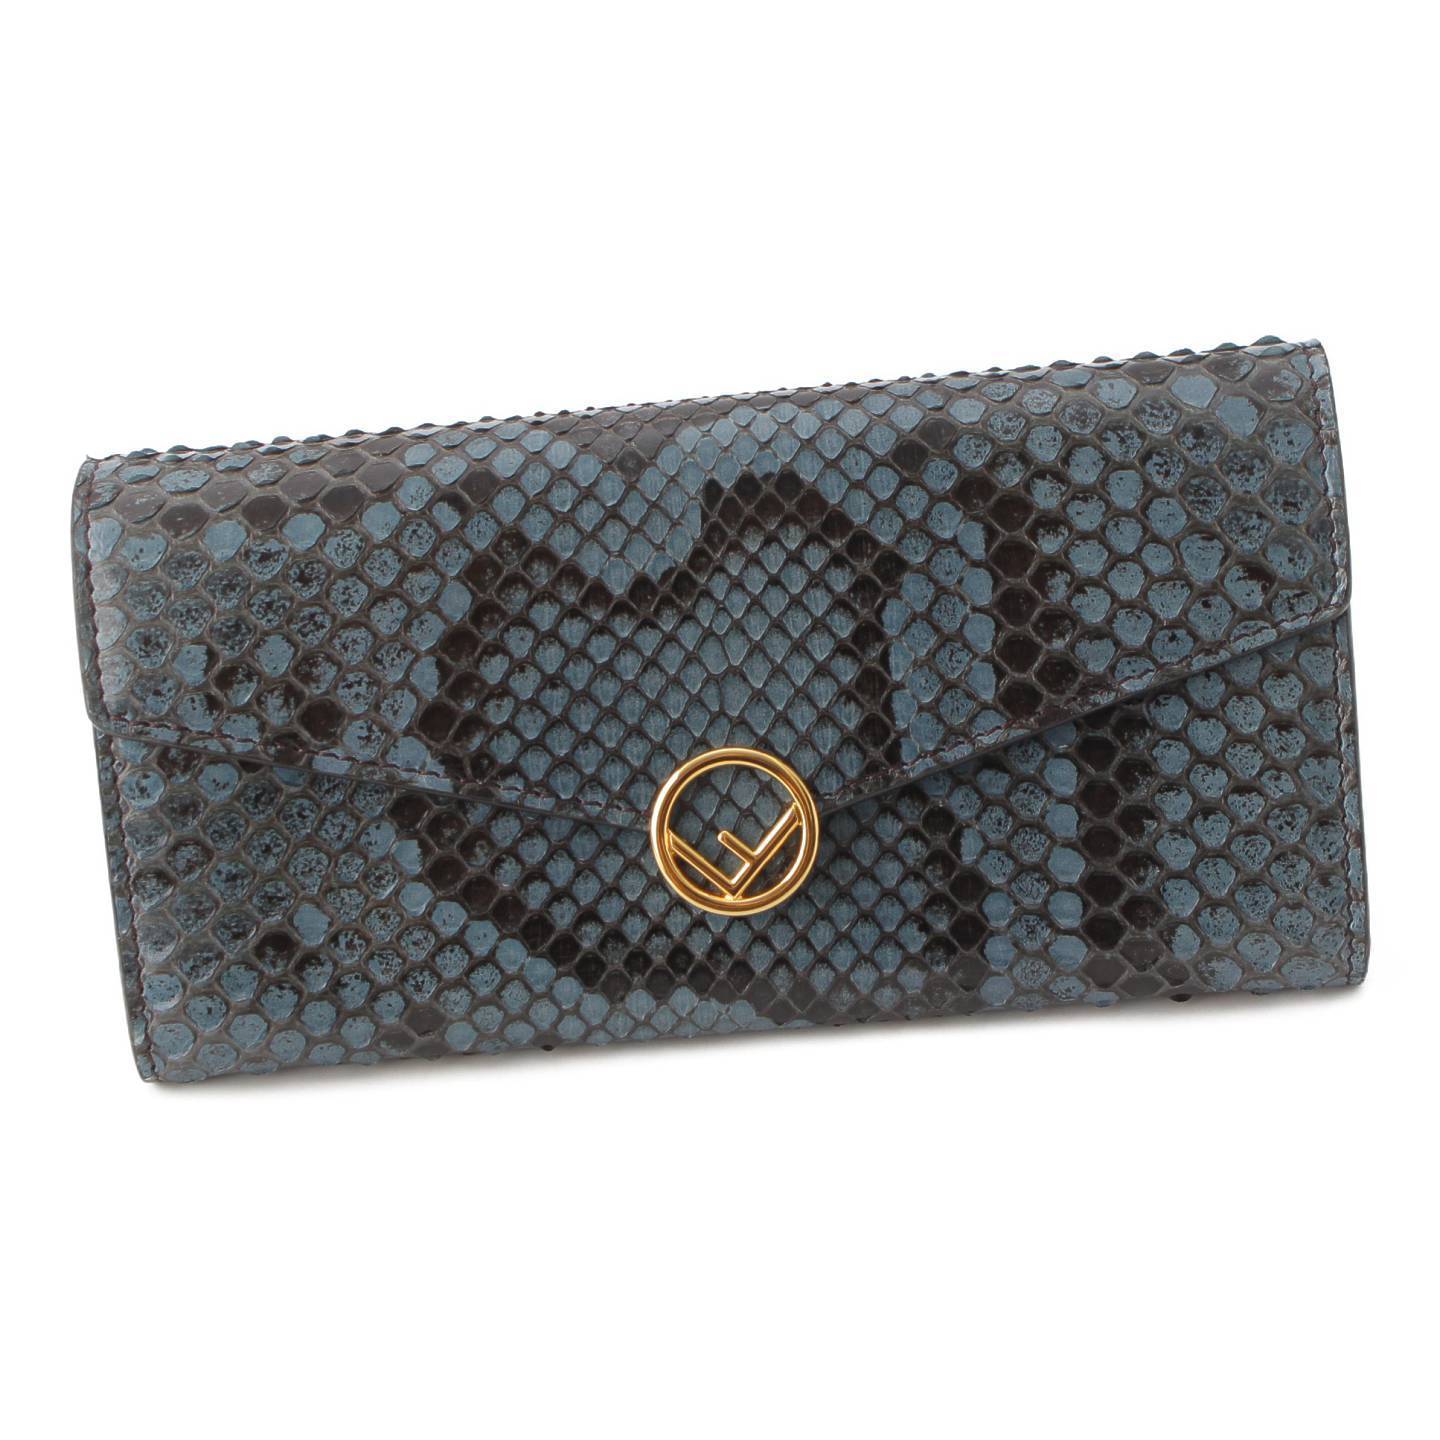 [ Fendi ]Fendiefiz Fendi python chain wallet 8M0365 blue [ used ][ regular goods guarantee ]194921